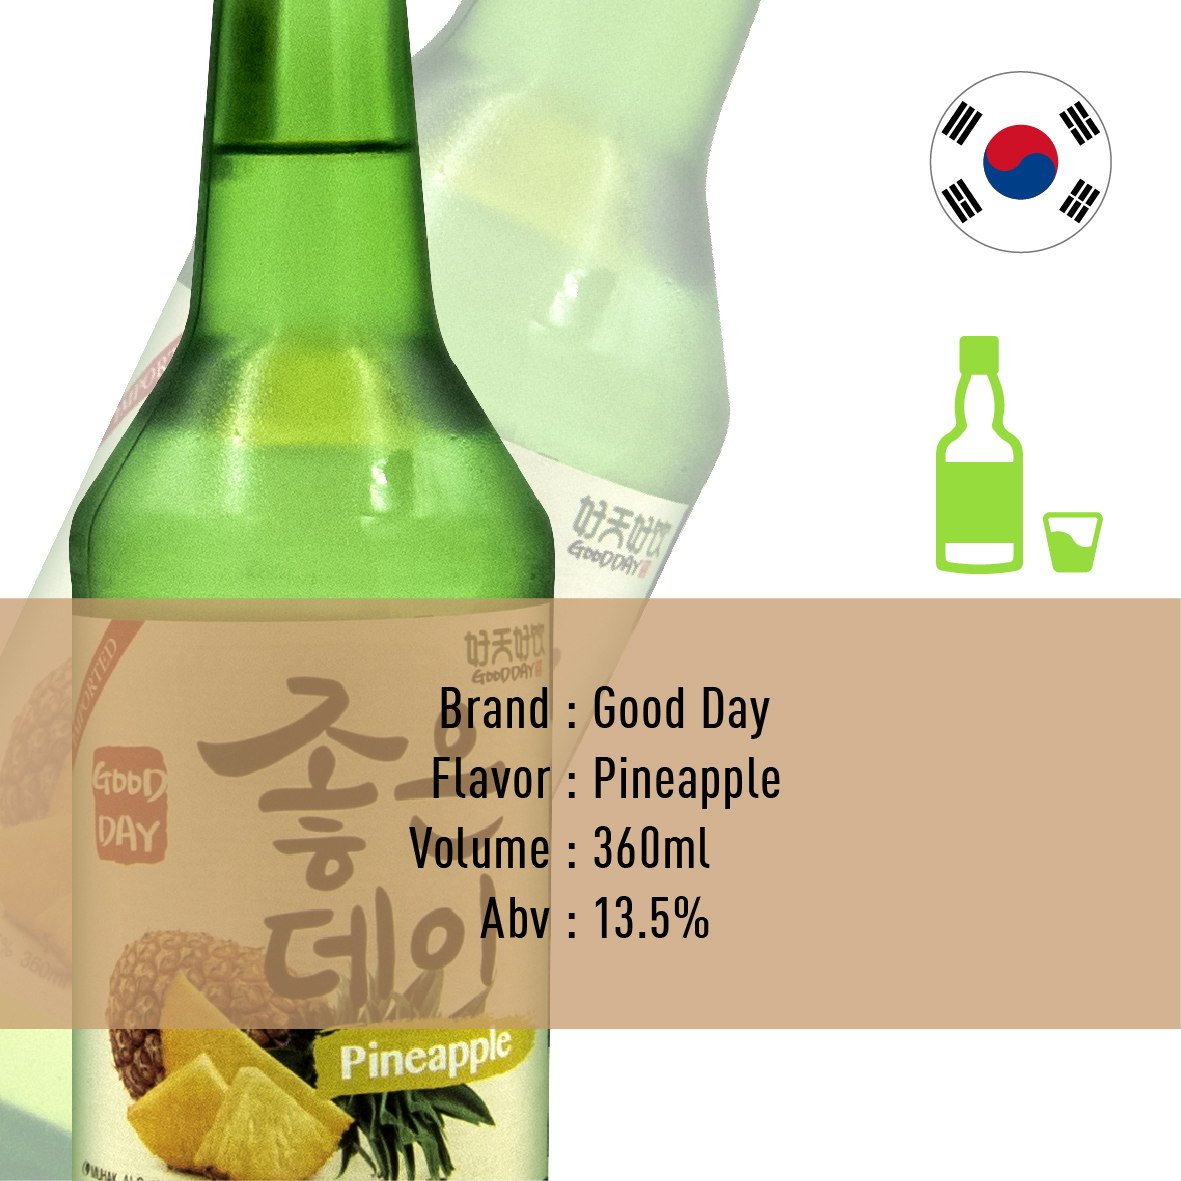 10-GooddaySoju-Pineapple-Korea-02.jpg